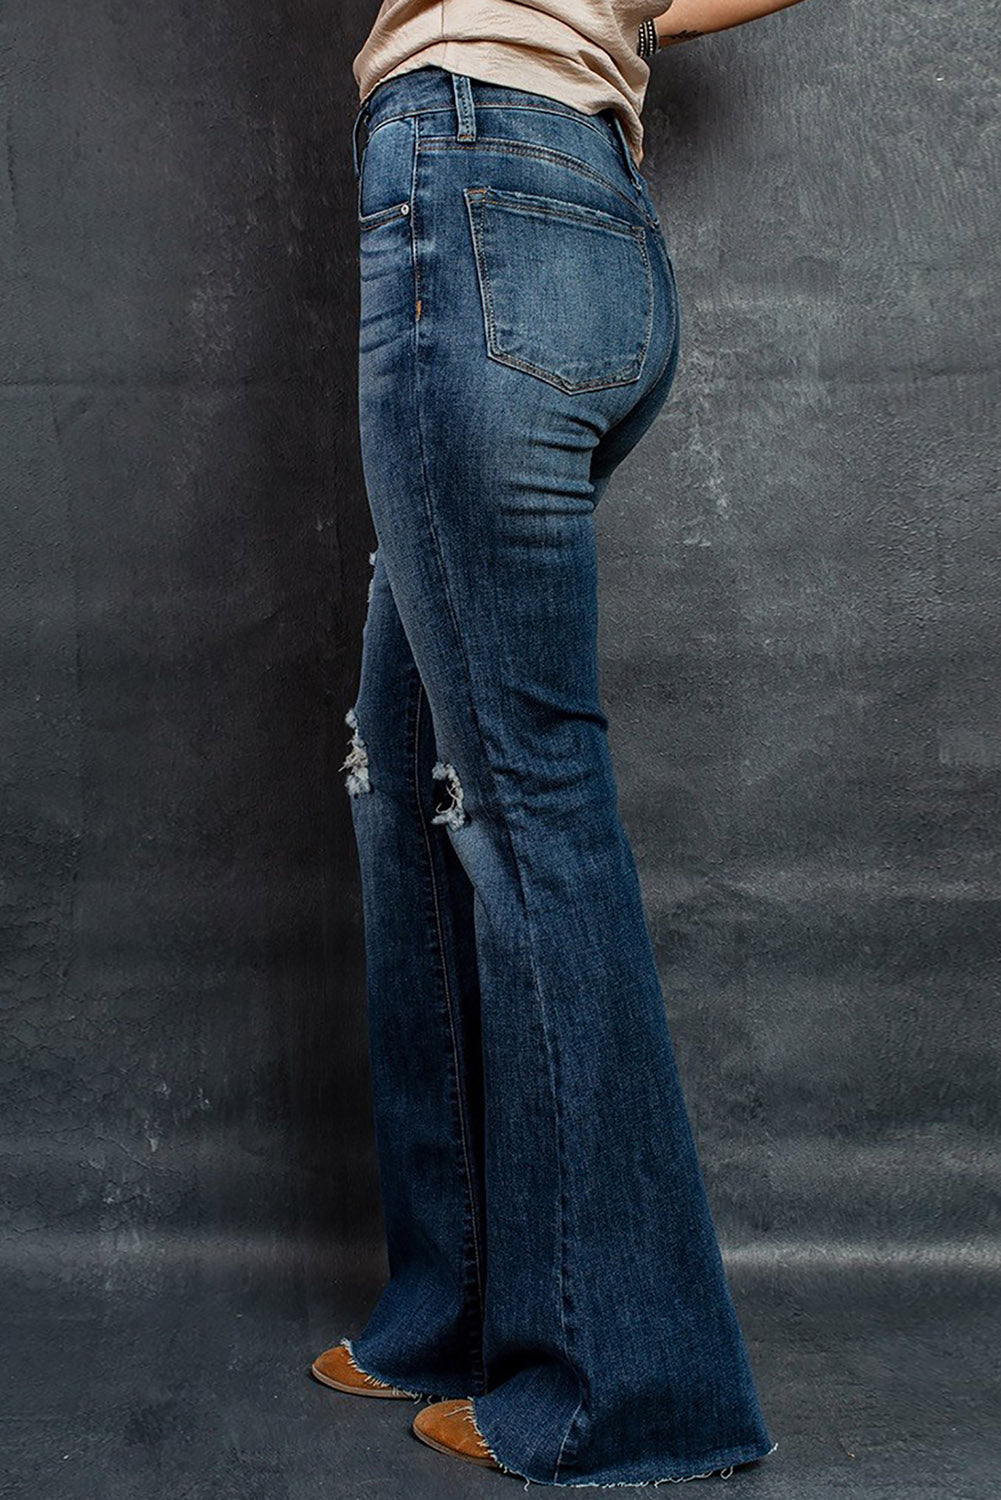 Himmelblaue, mittelhohe Flare-Jeans in dunkler Waschung